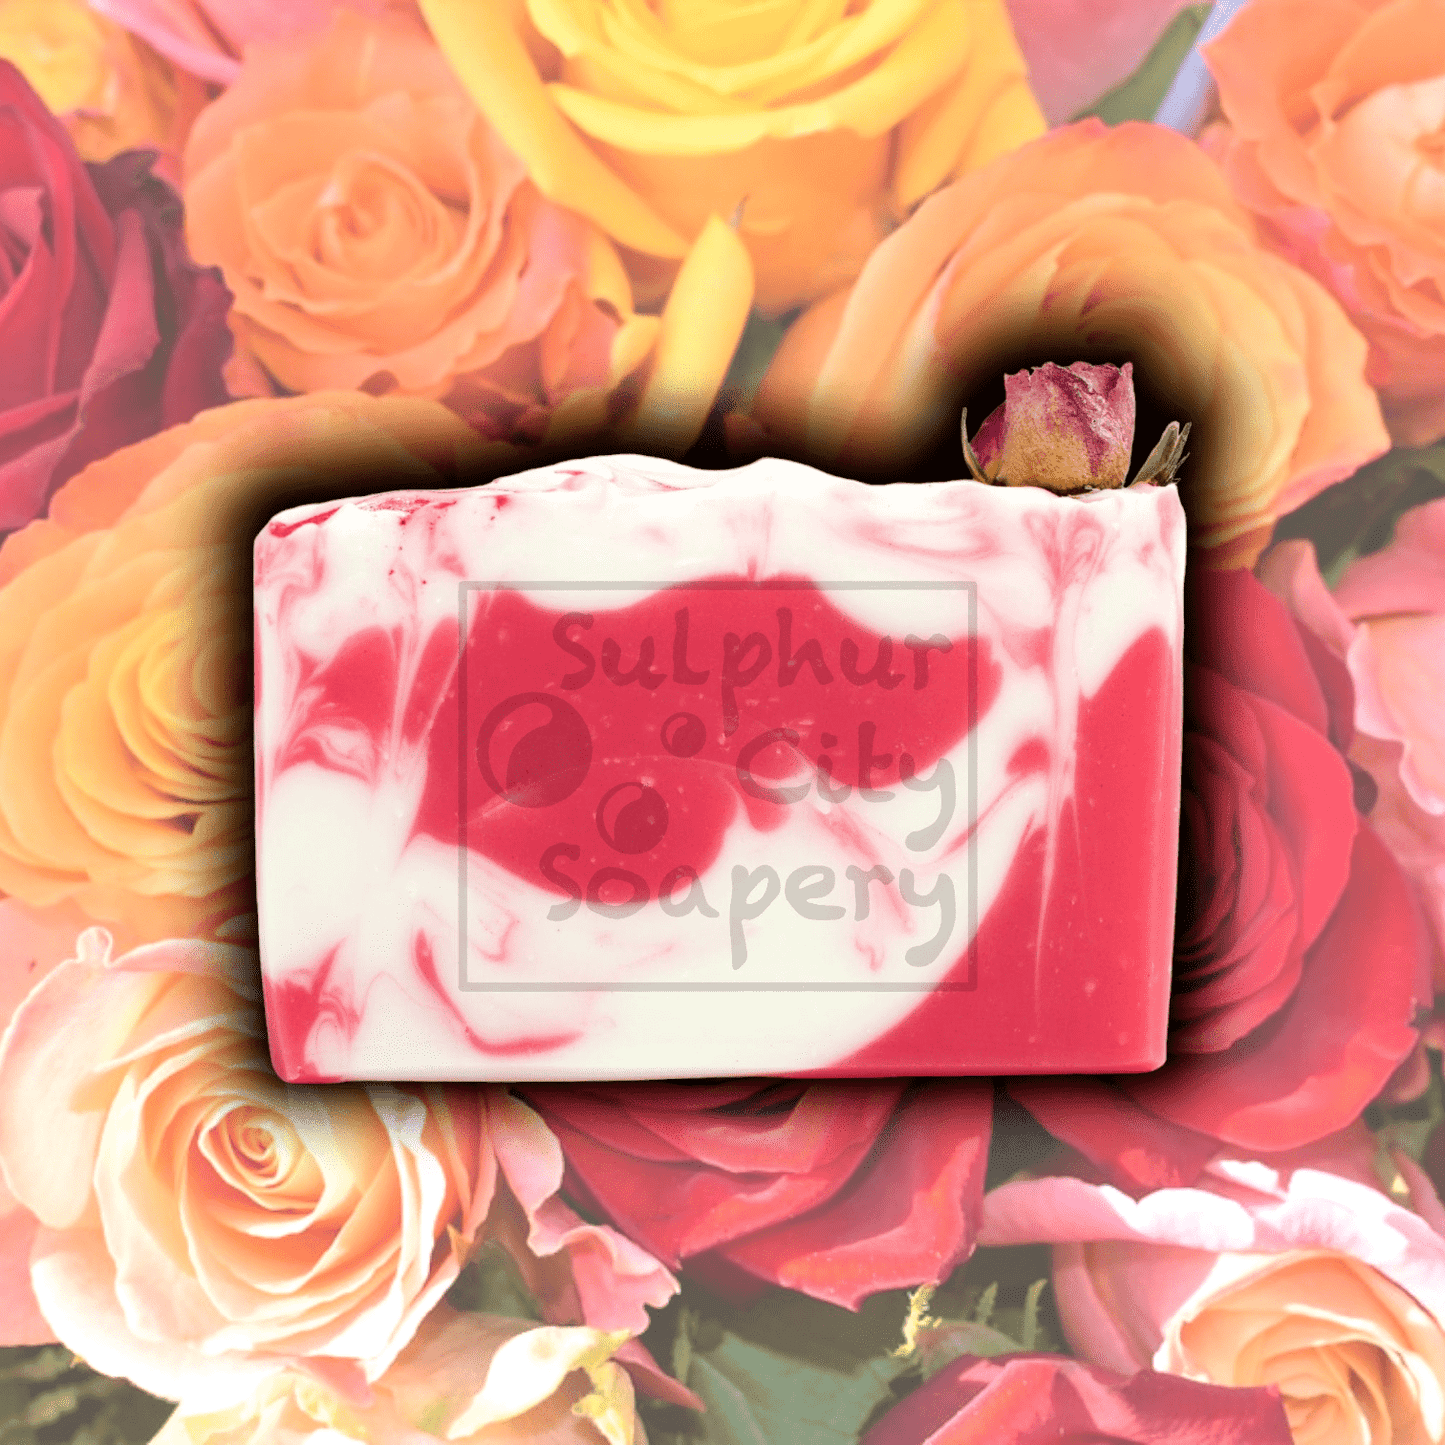 Sulphur City Soapery soap Rose petal scented soap.